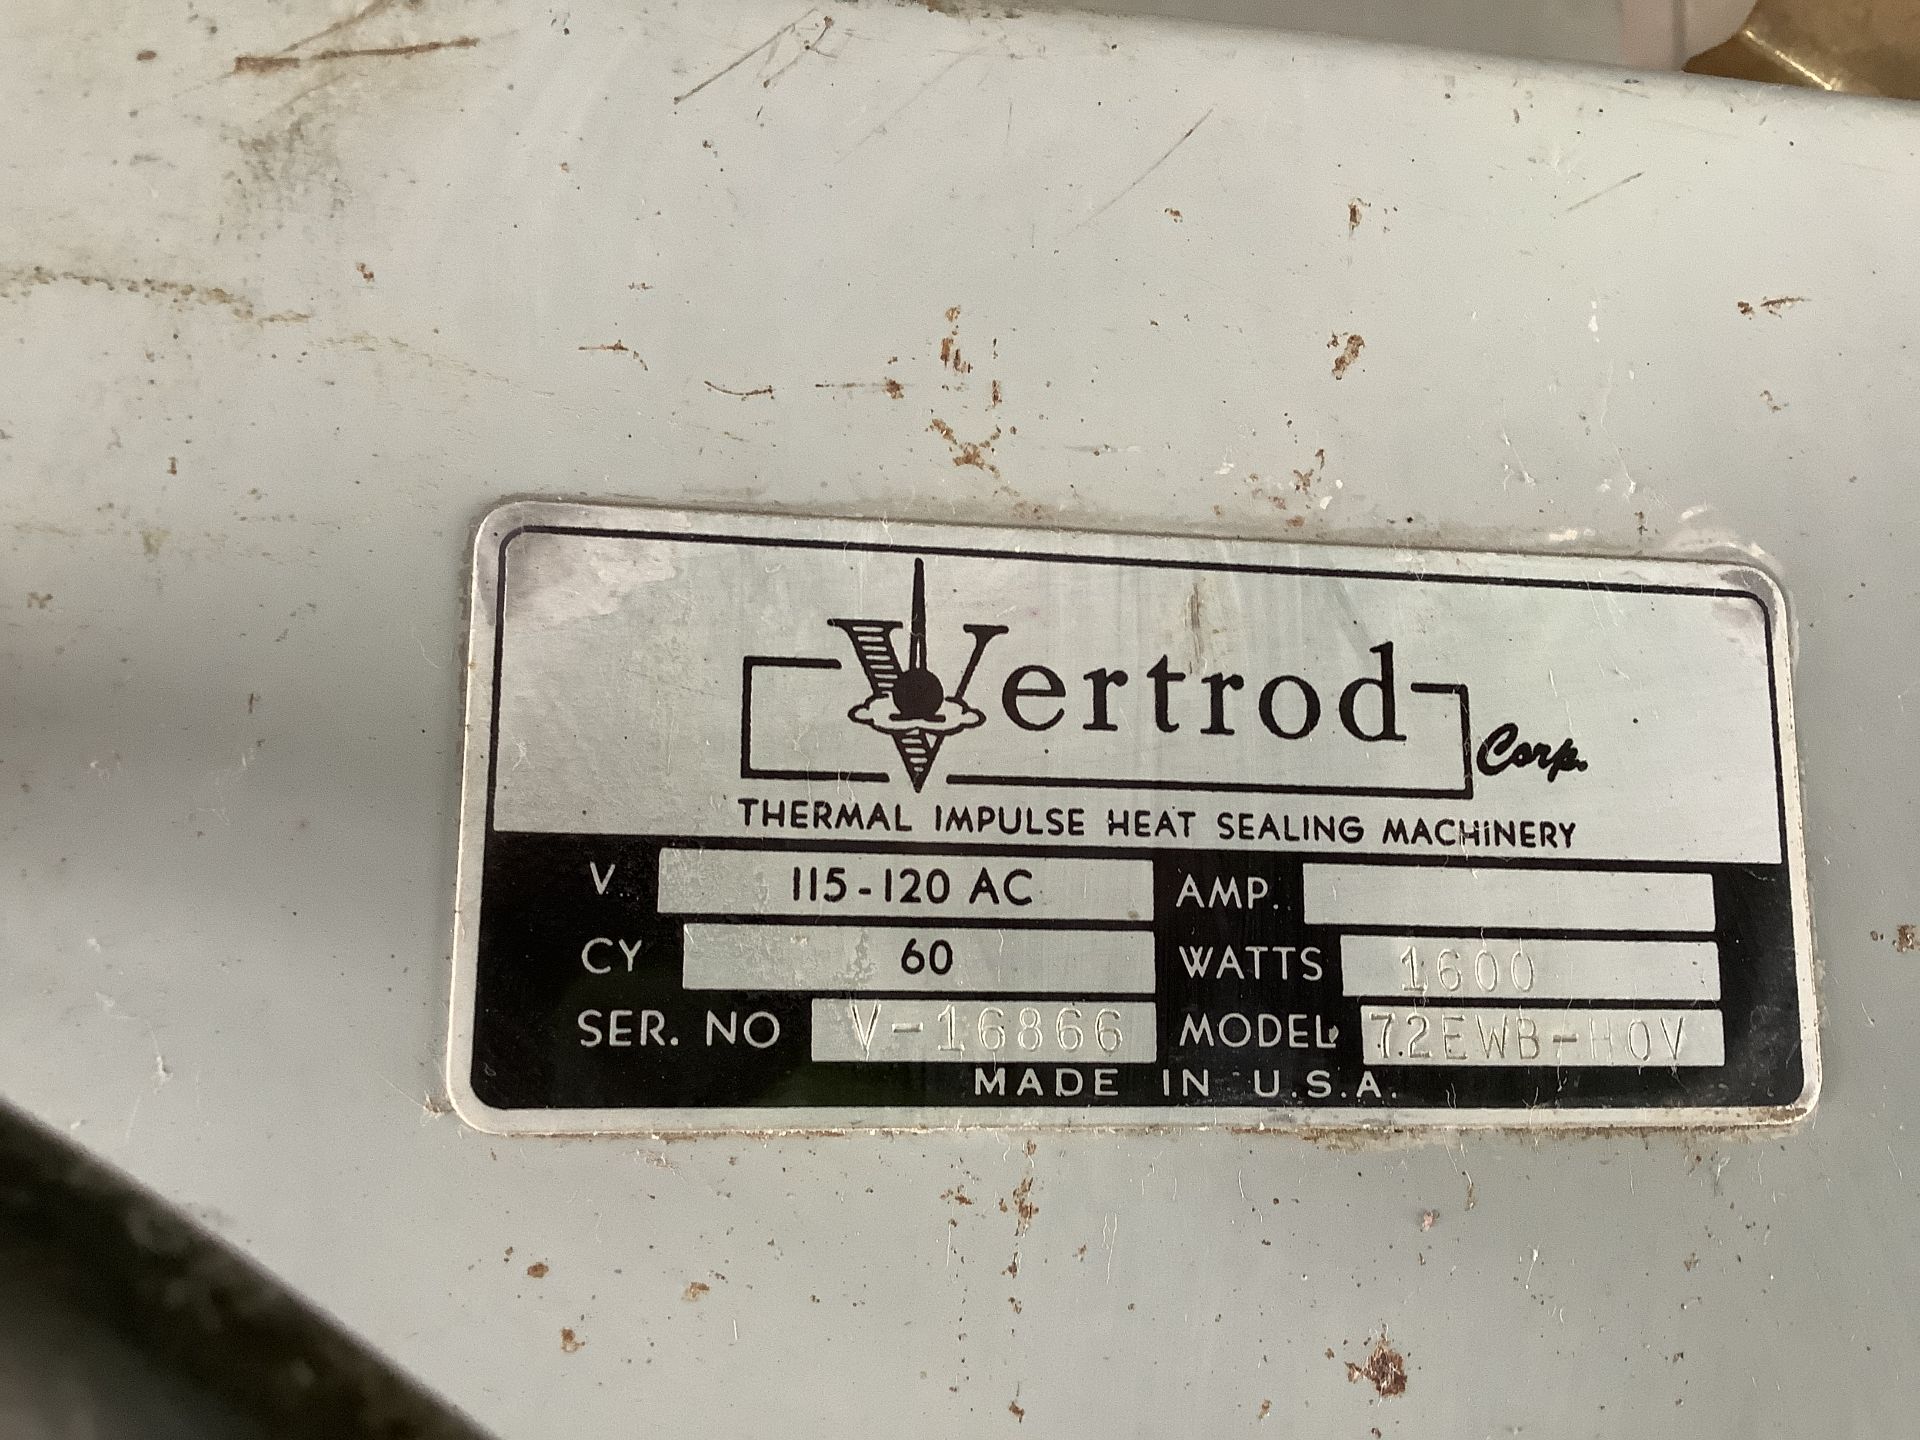 72” Vertrod Model 72 EWB-HOV sealer. Serial # V-16866. Age 1992. Voltage 115-120 AC, 60 hertz, - Image 6 of 8